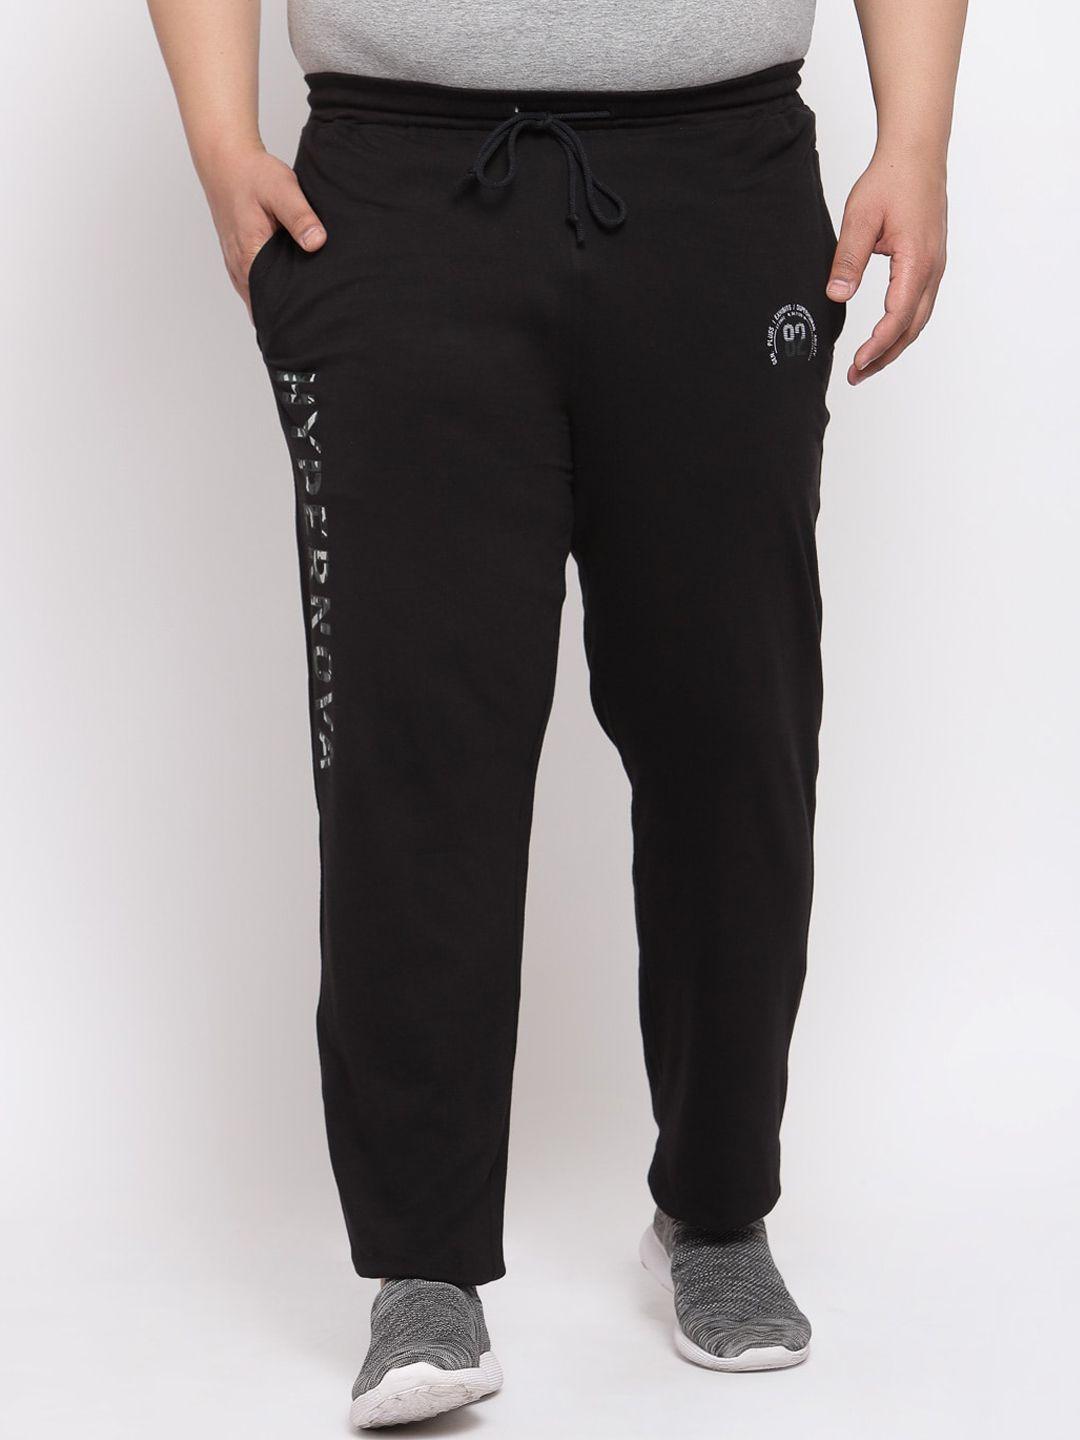 pluss-men-black-solid-straight-fit-track-pants